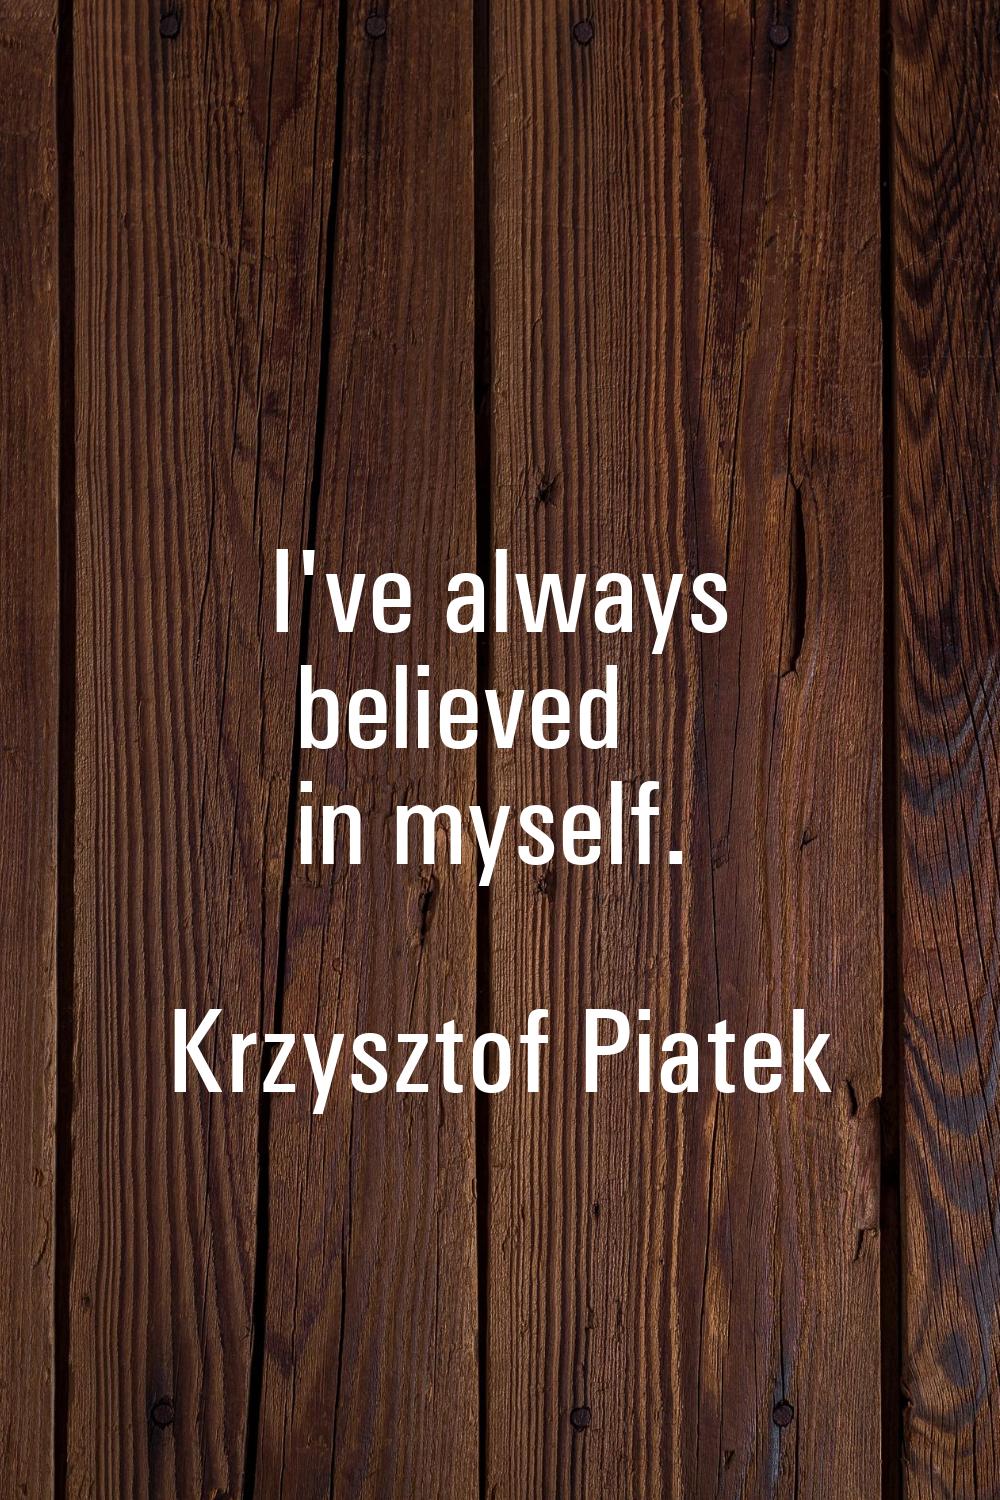 I've always believed in myself.